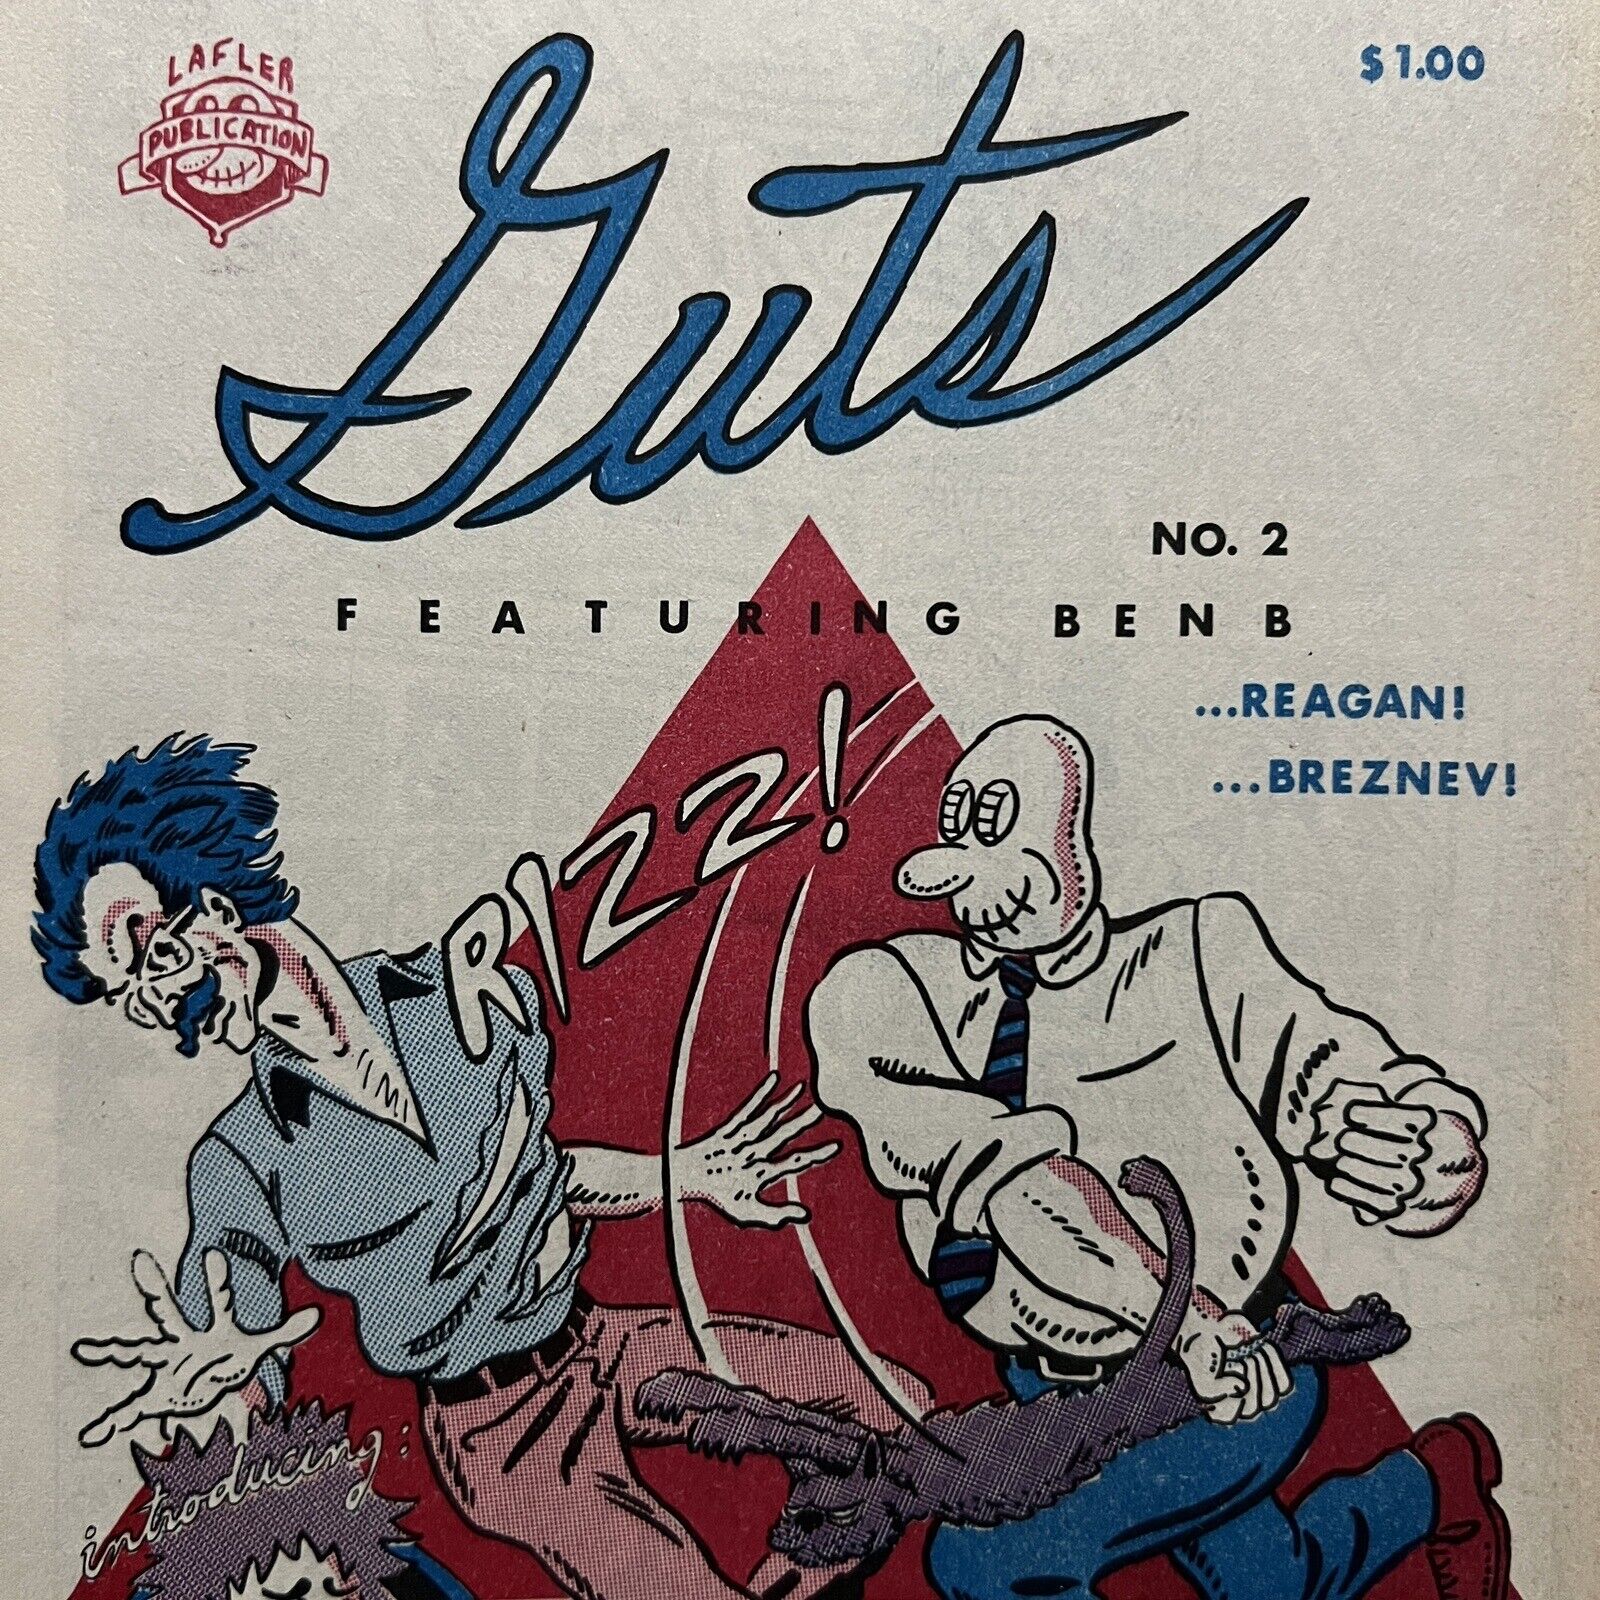 Guts #2 Steve Lafler Publication 1982 Early RARE OOP HTF Underground Comix 👀